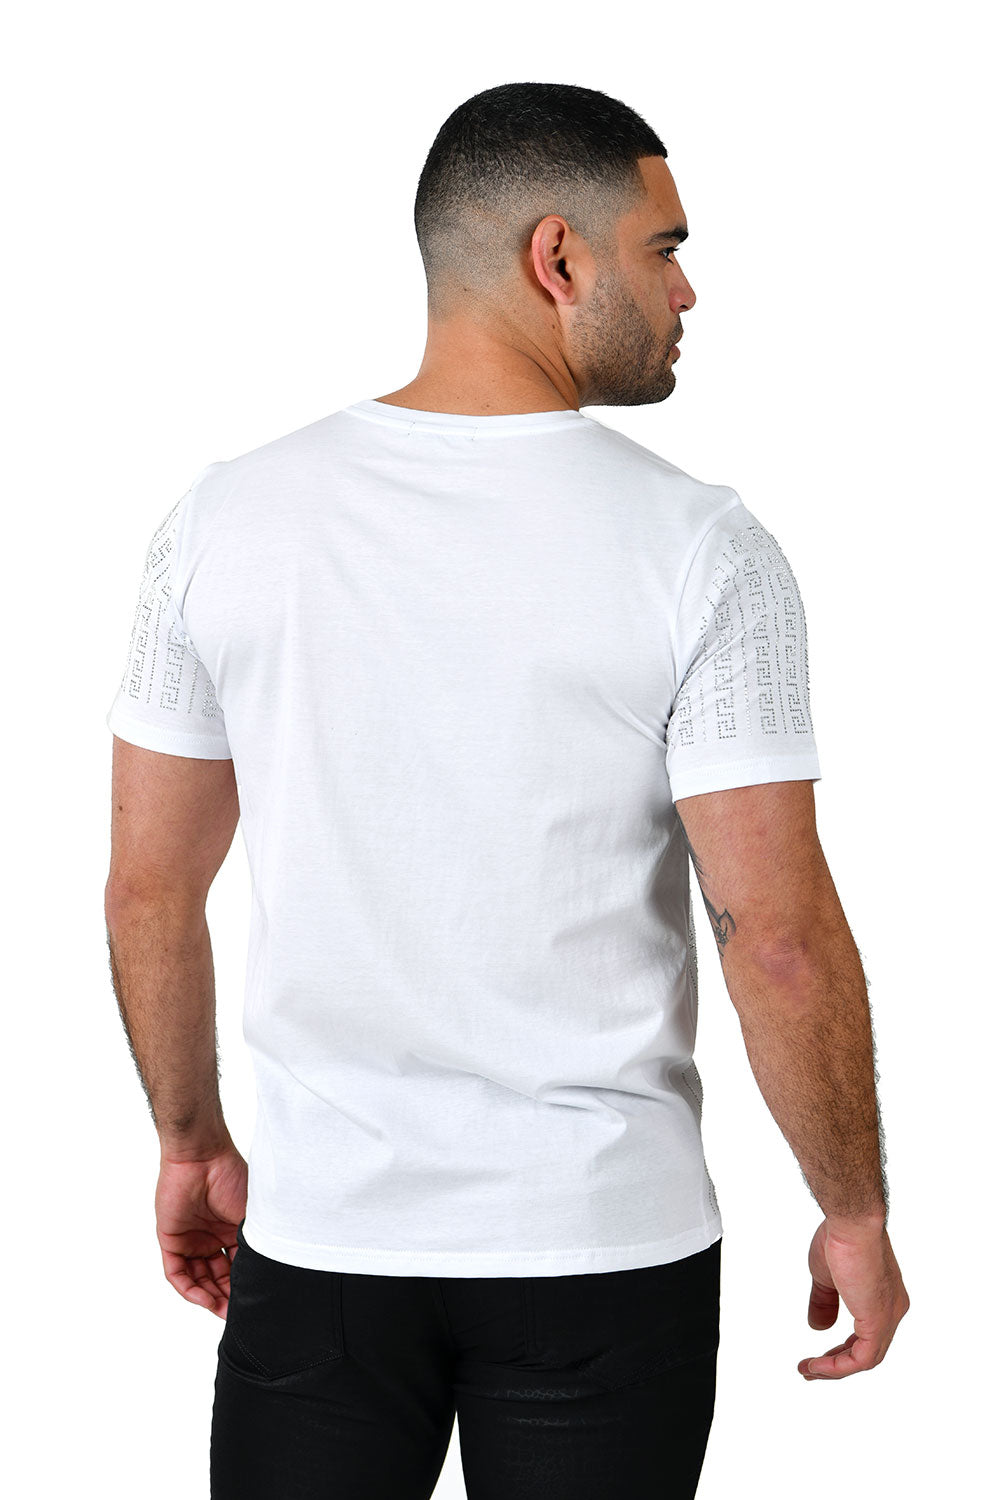 Barabas Men's Crew Neck Greek Key Rhinestone T-shirts ST937 White